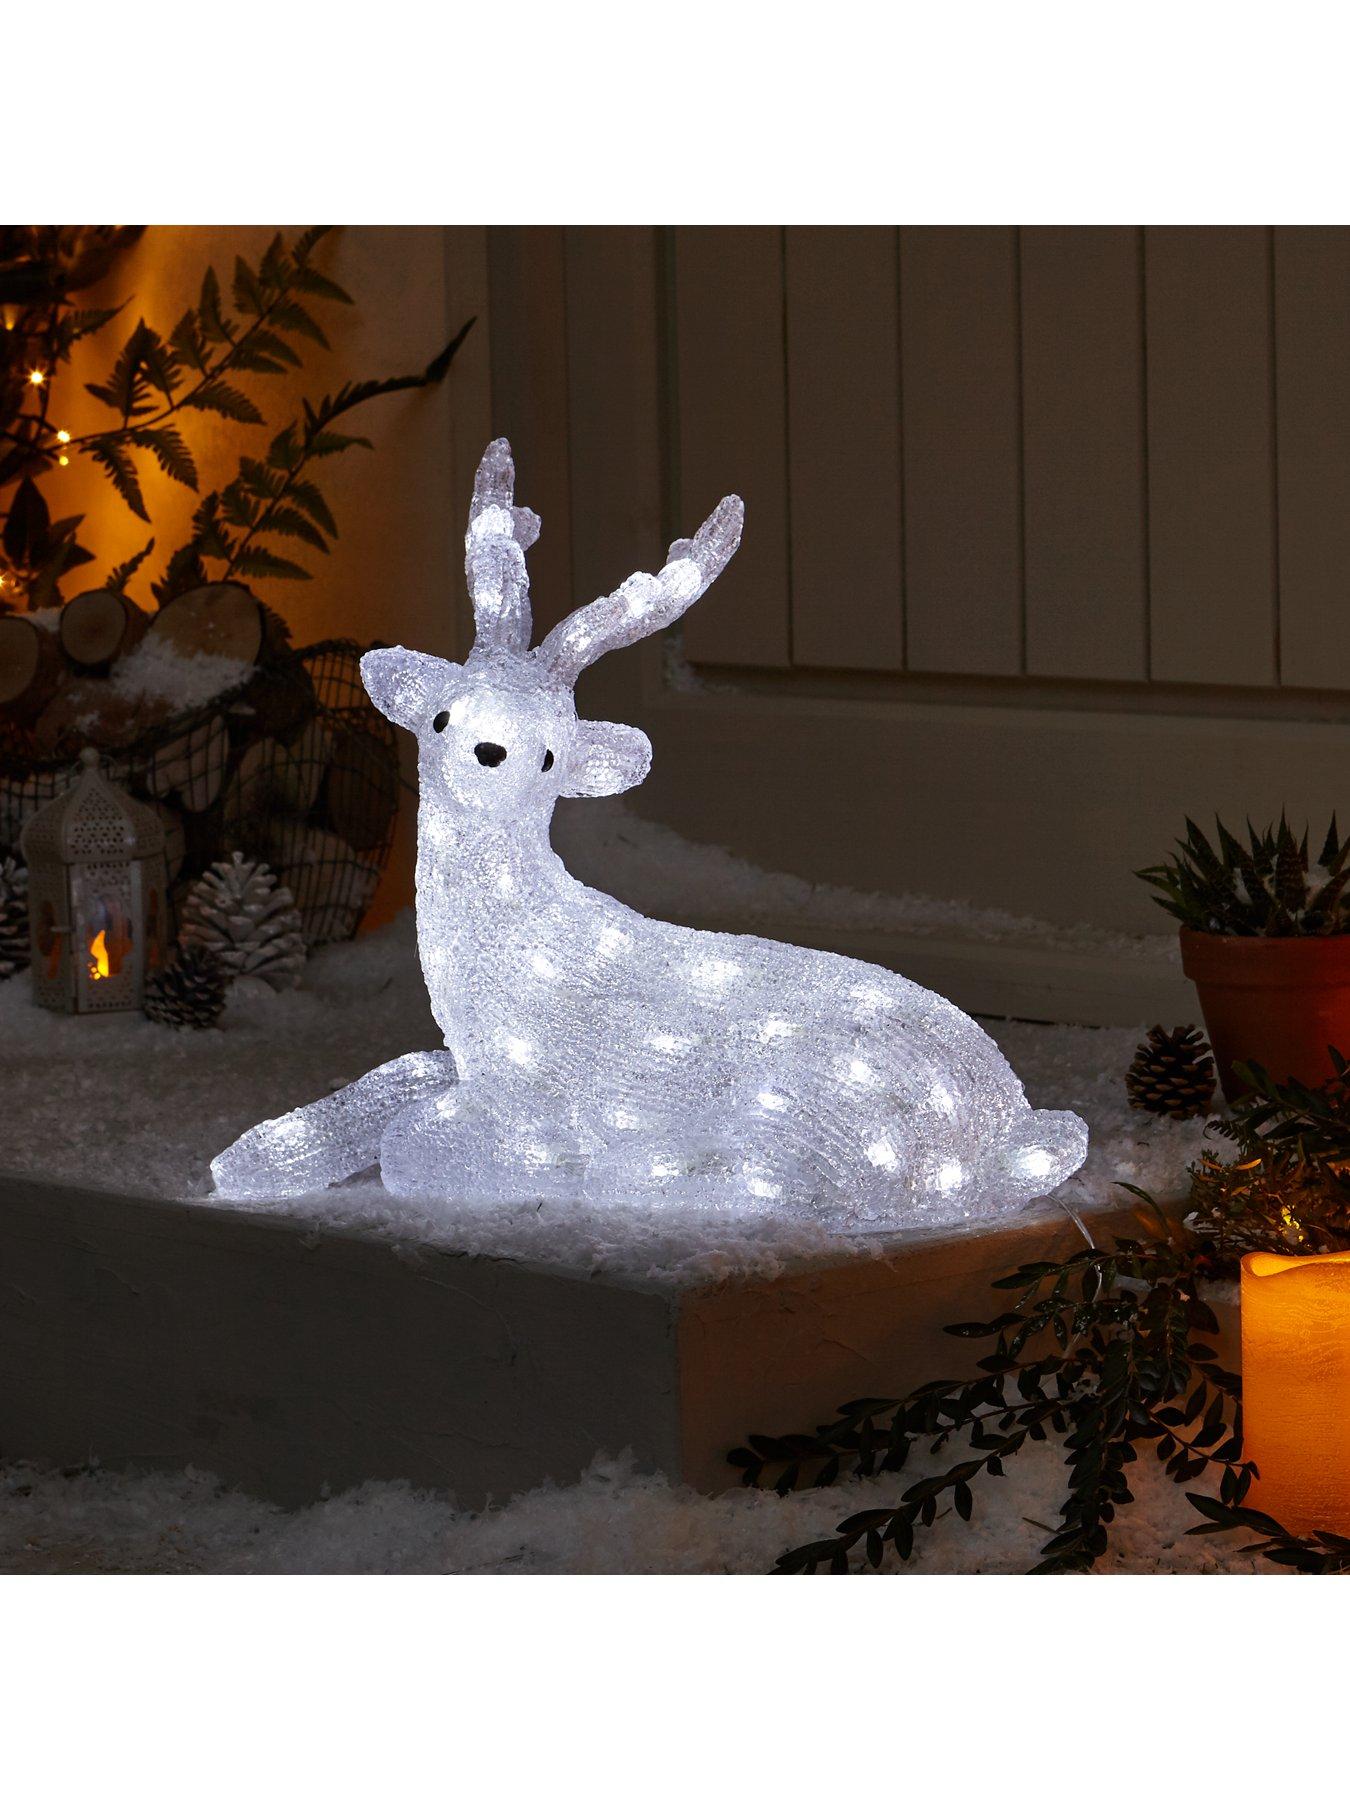 Spun Acrylic Light Up Reindeer With Antlers Outdoor Christmas